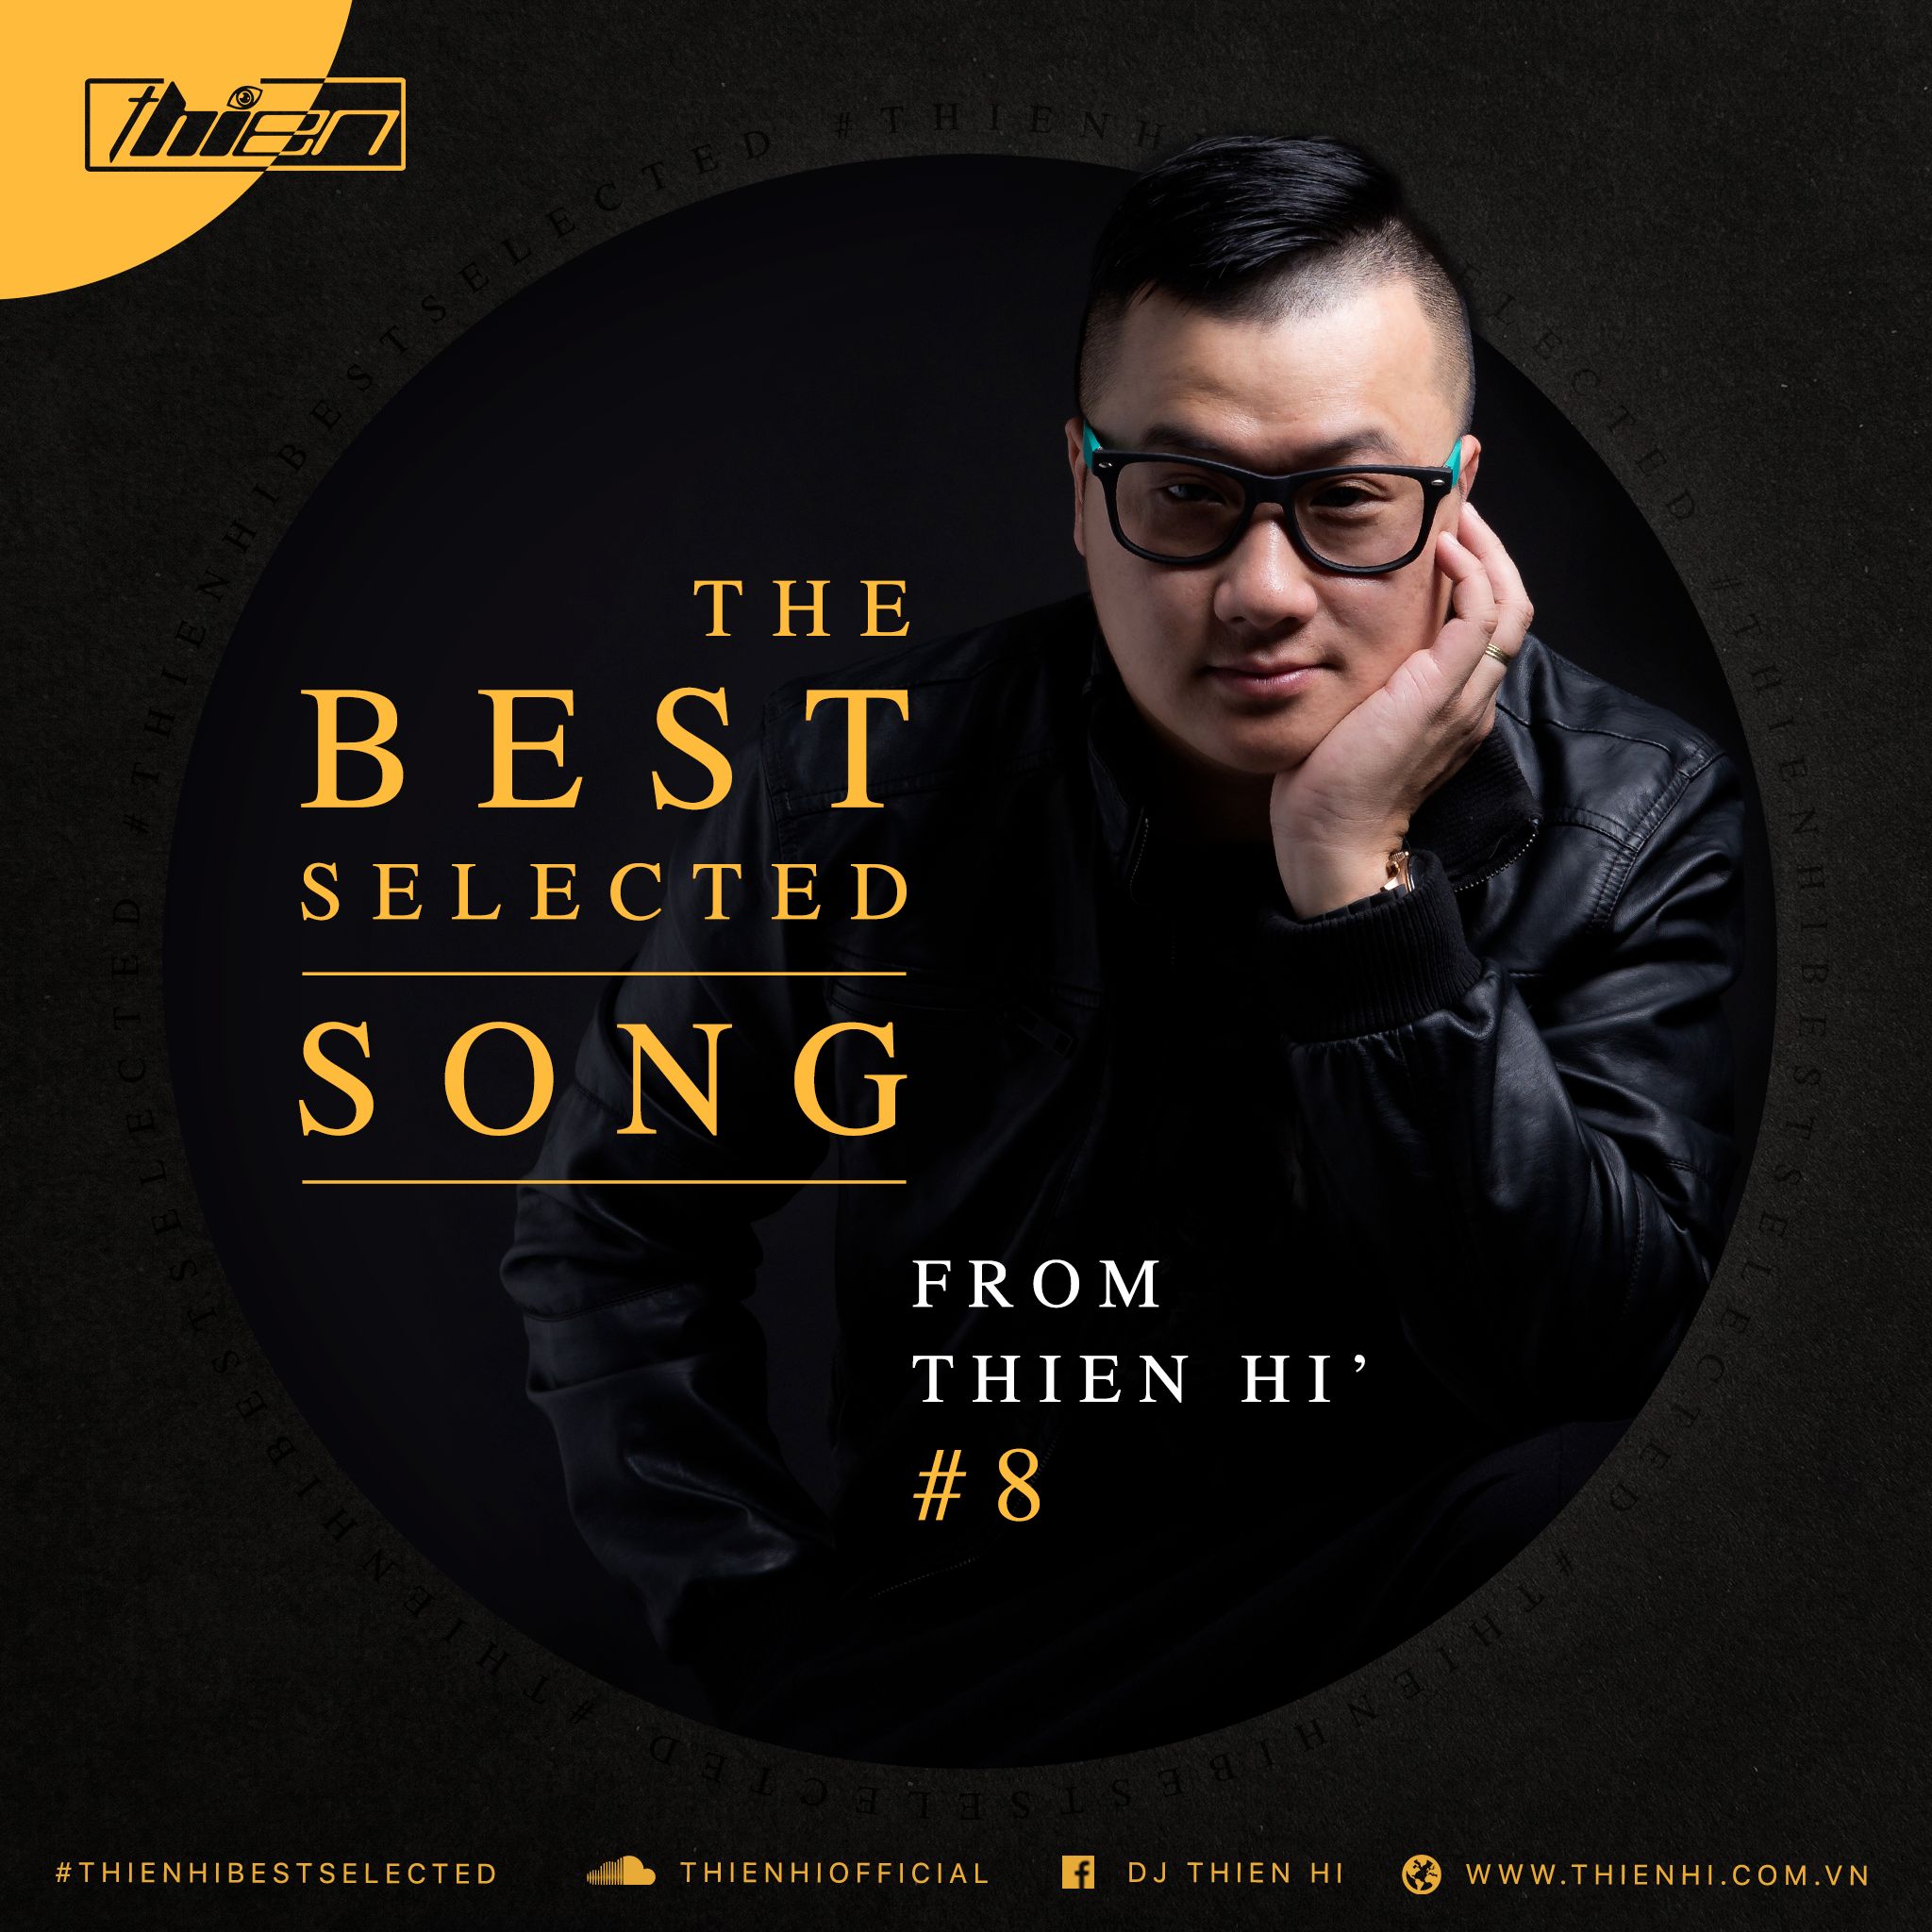 Shkarko Thien Hi - The Best Selected Song #8